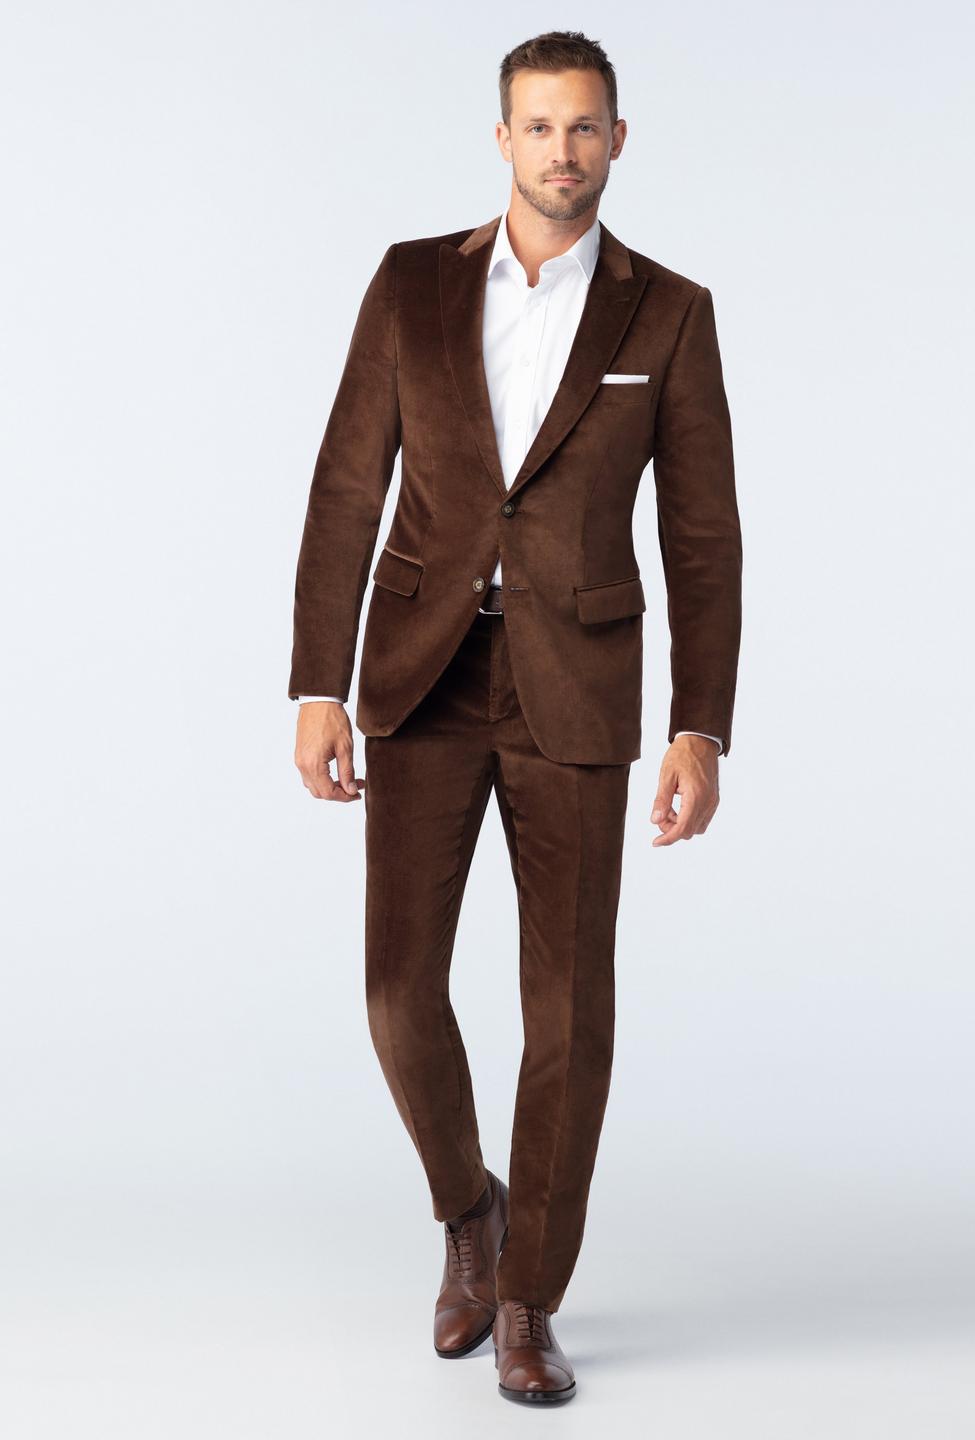 Brown blazer - Harford Solid Design from Premium Indochino Collection